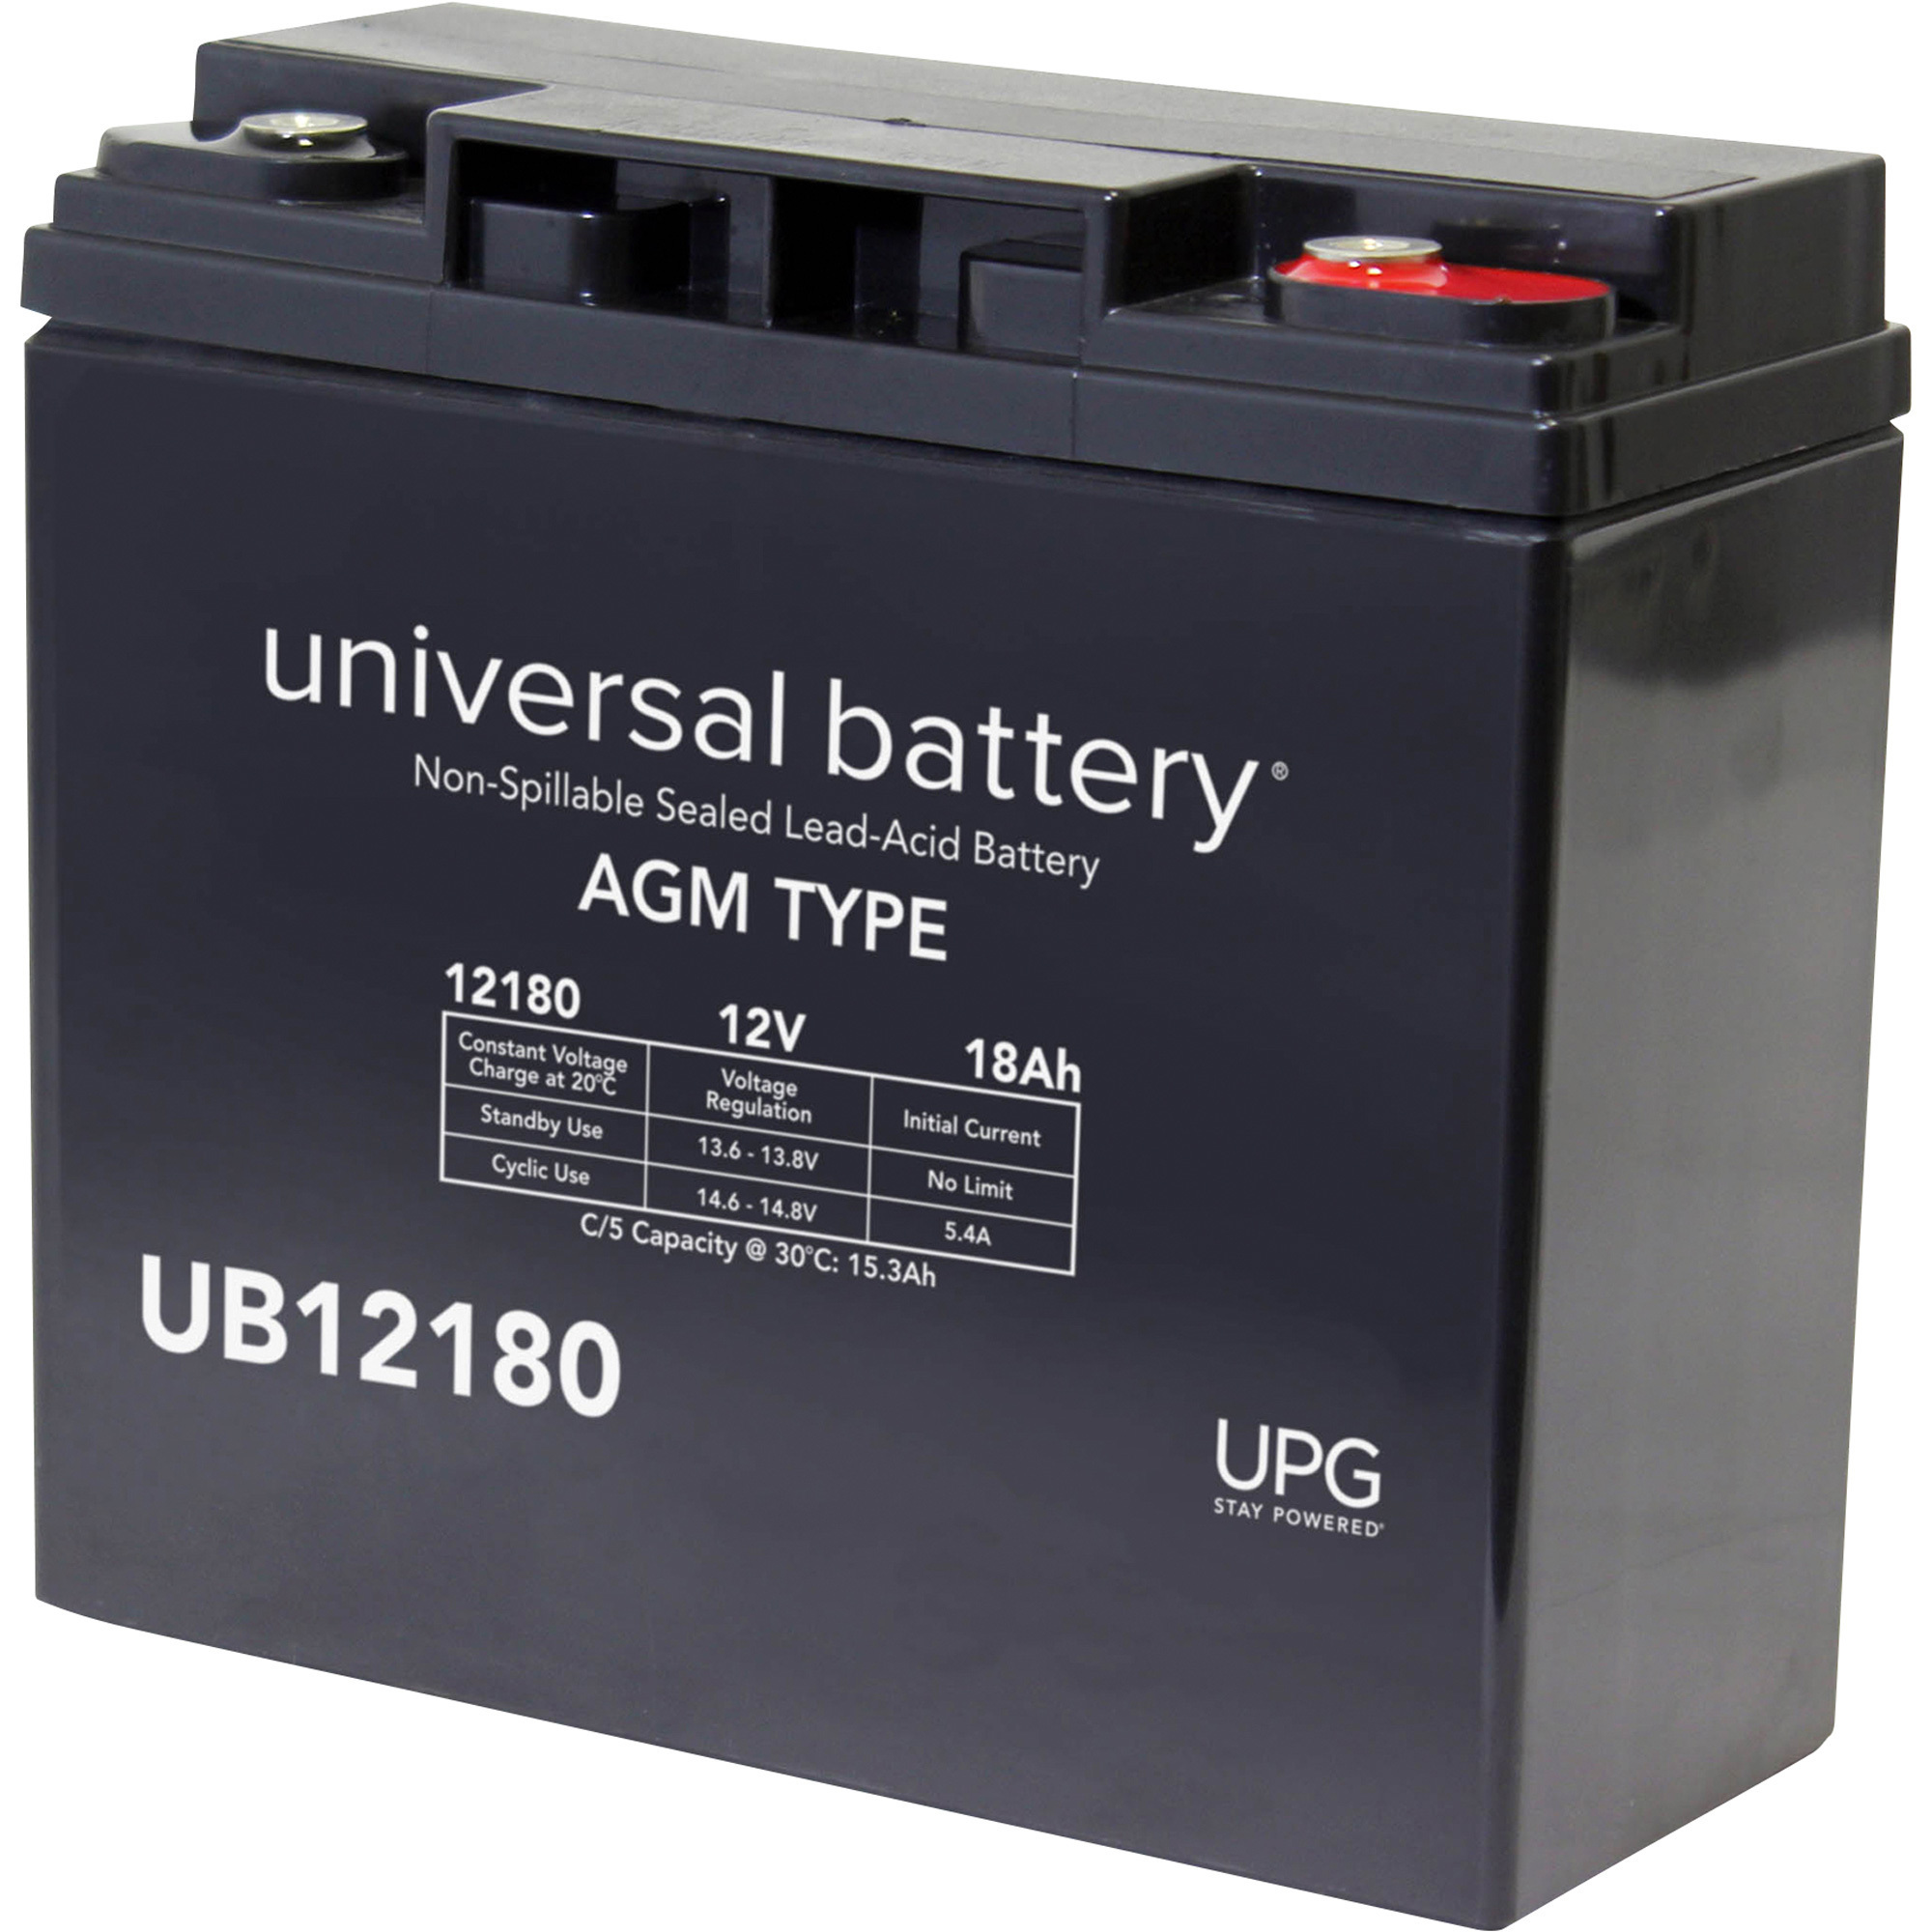 UPG Universal Sealed Lead-Acid Battery, AGM-type, 12V, 18 Amps, Model UB12180